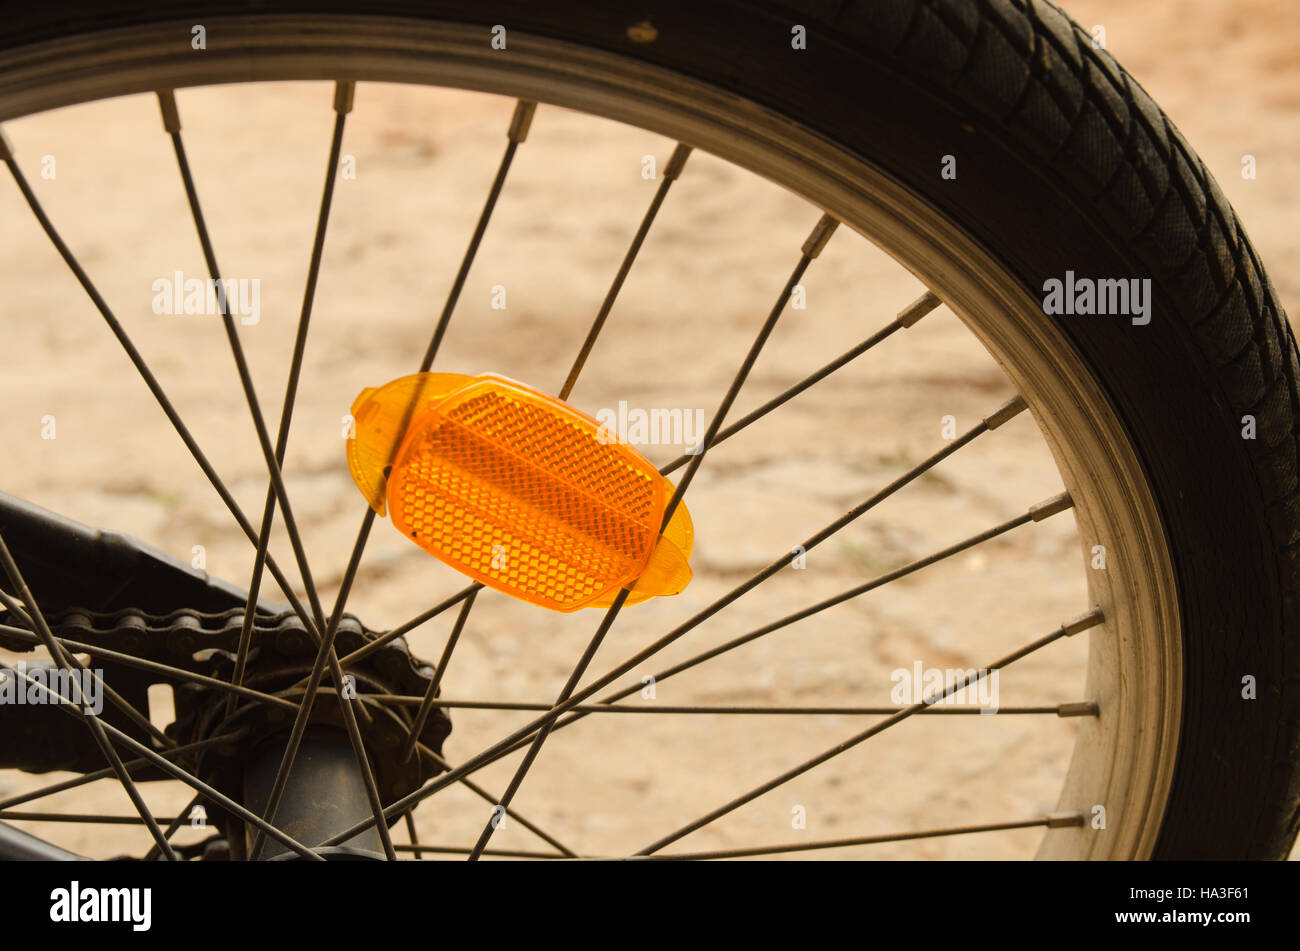 Fahrrad reflektor -Fotos und -Bildmaterial in hoher Auflösung – Alamy